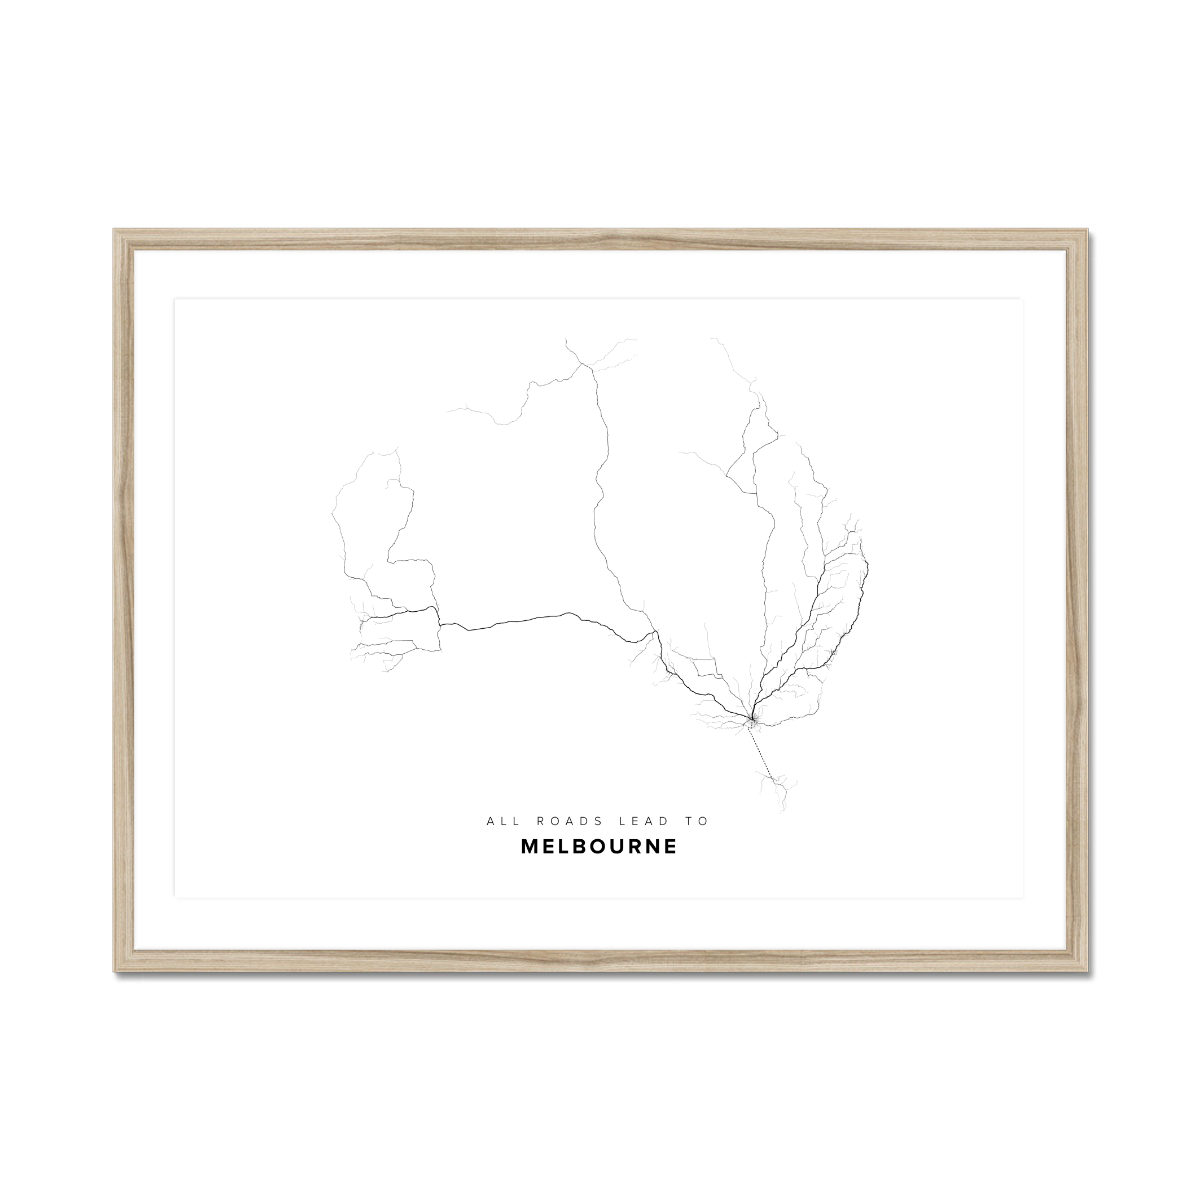 All roads lead to Melbourne (Australia) Fine Art Map Print